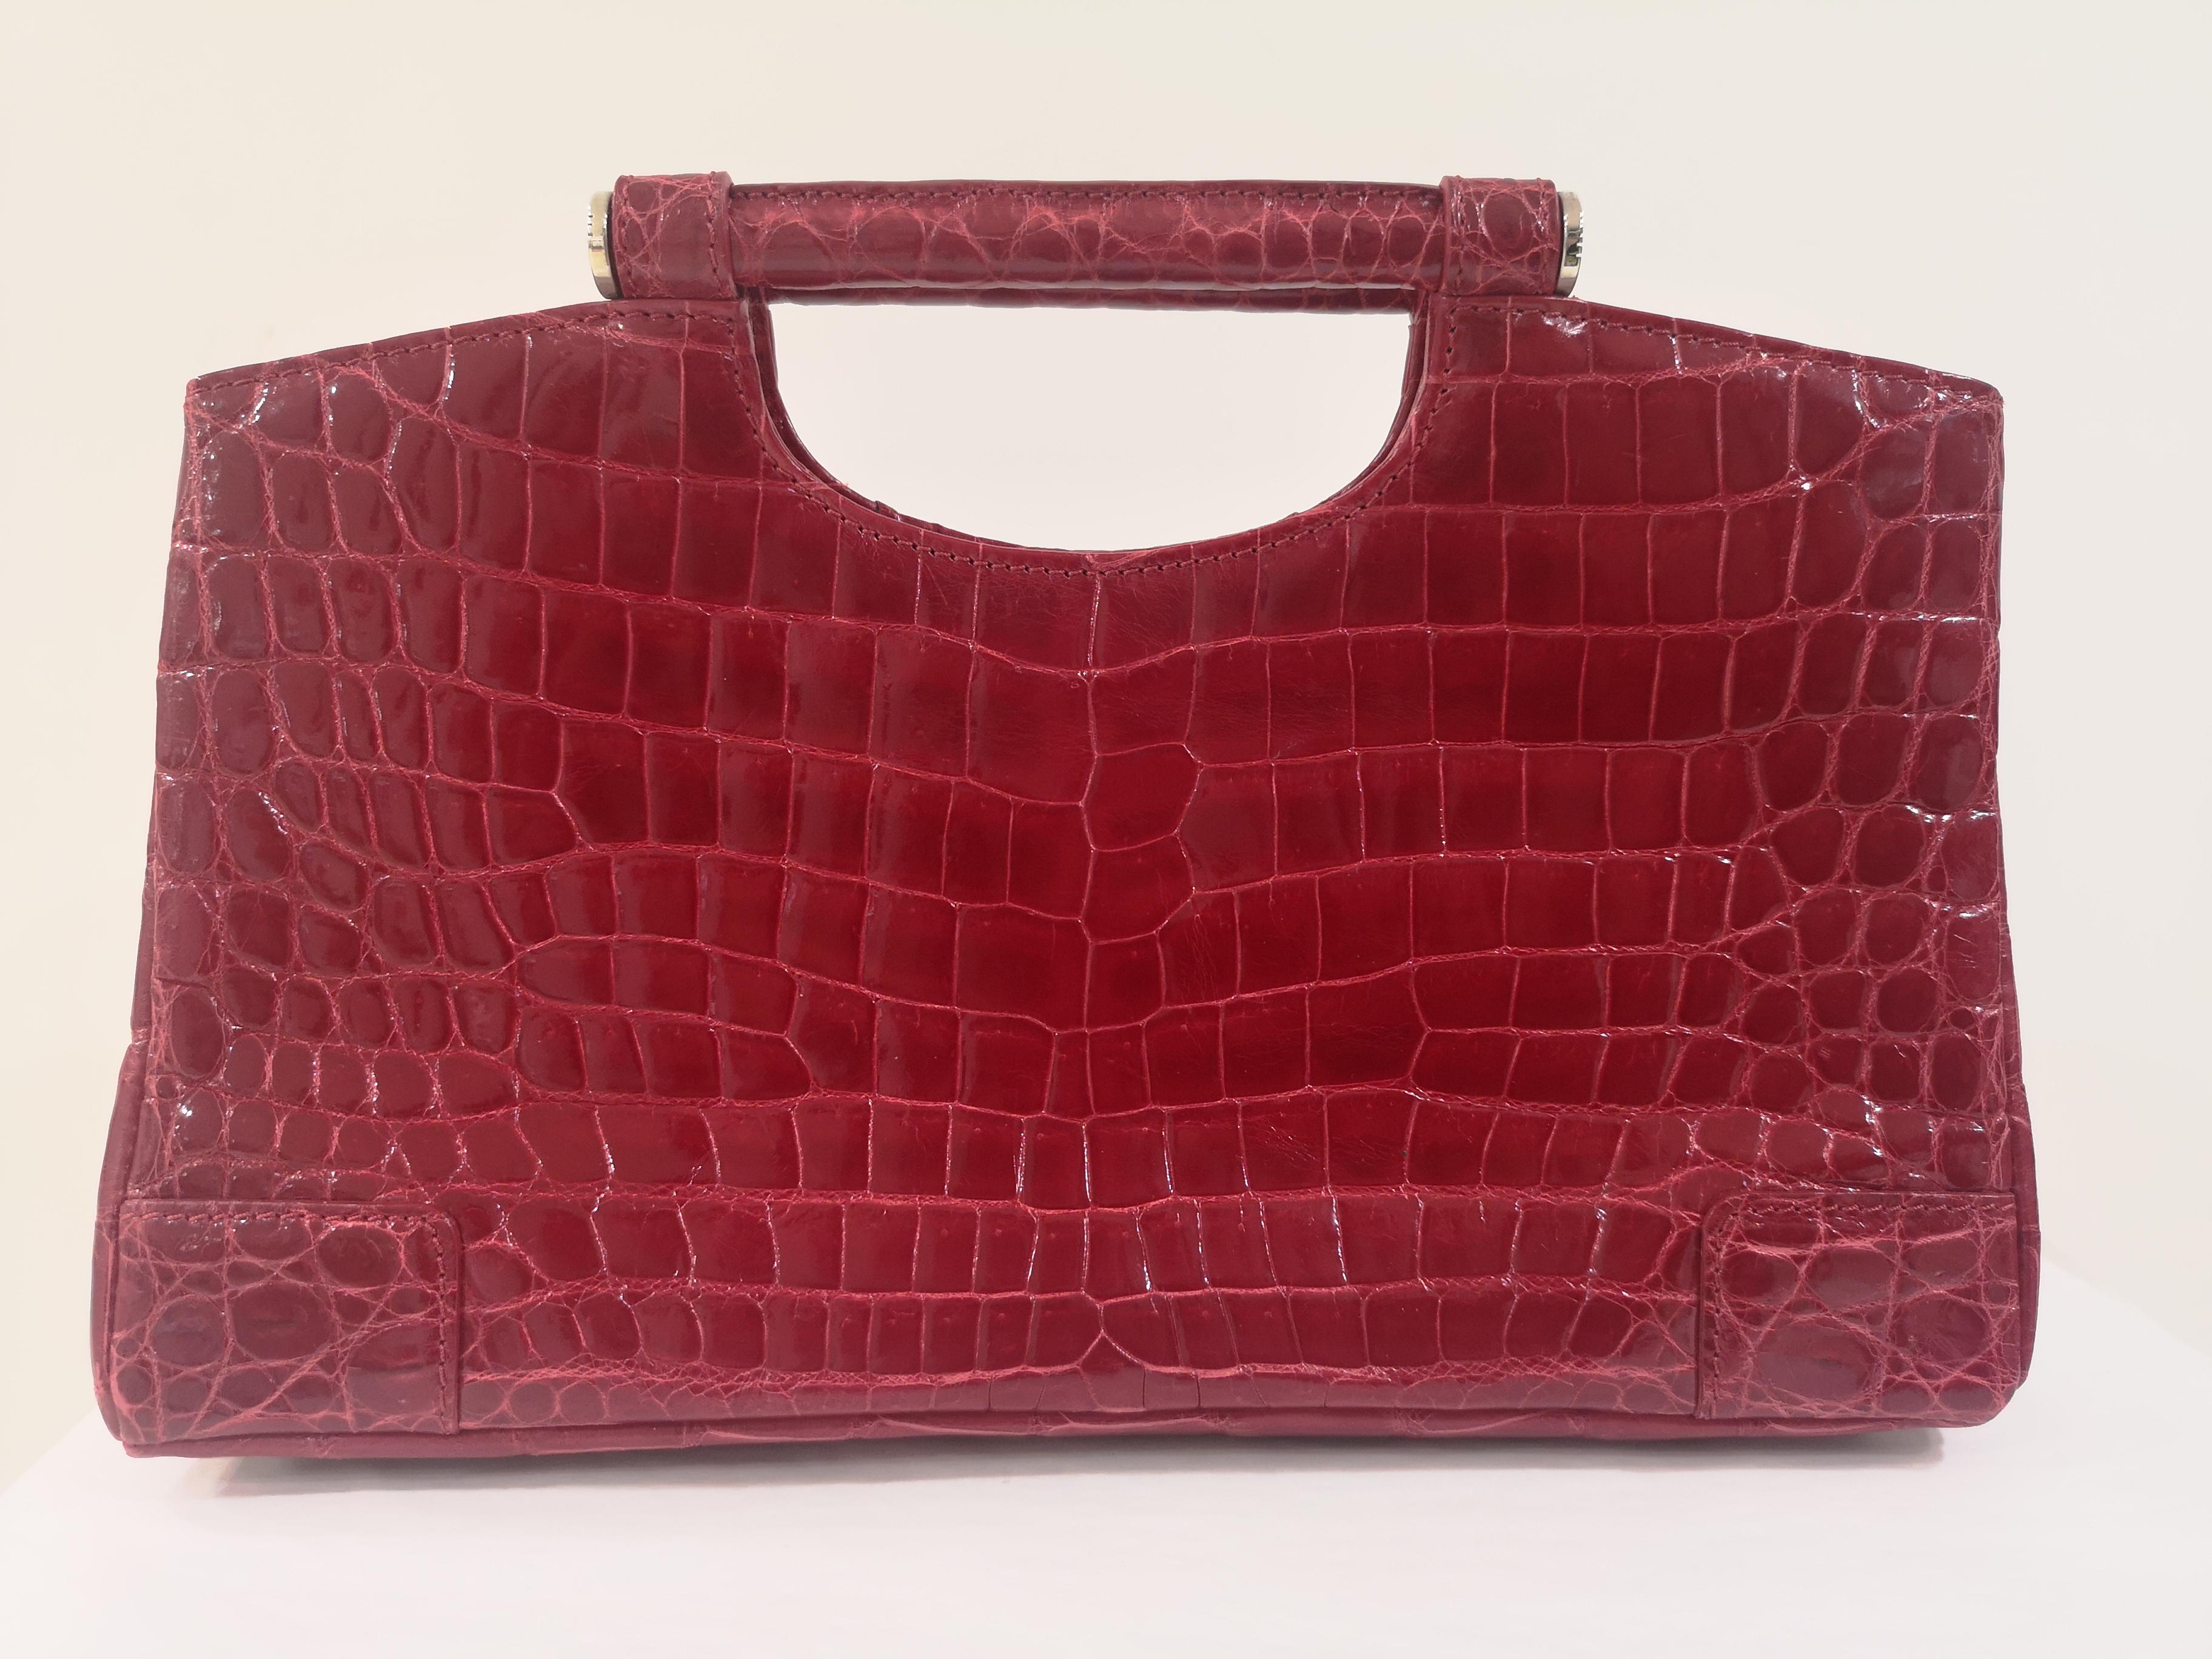 1970s Colombo Red crocodile handbag
measurements: 30 * 17 cm 10 cm depth 